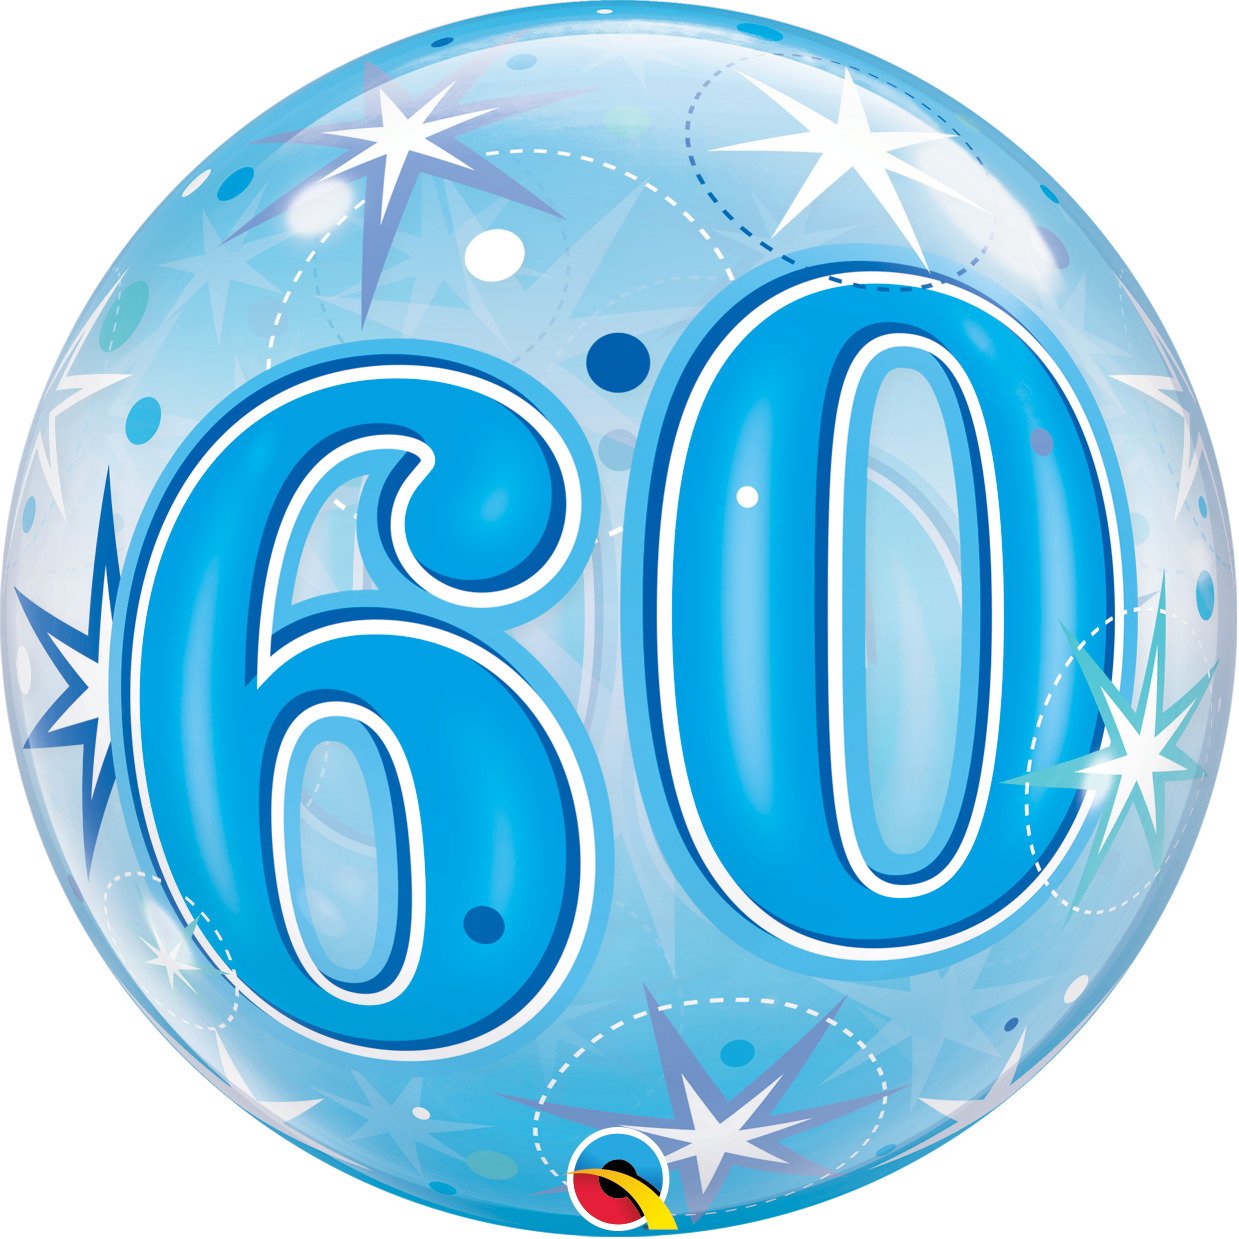 Balloon Bubble 56cm 60th Birthday Blue Last Chance Buy